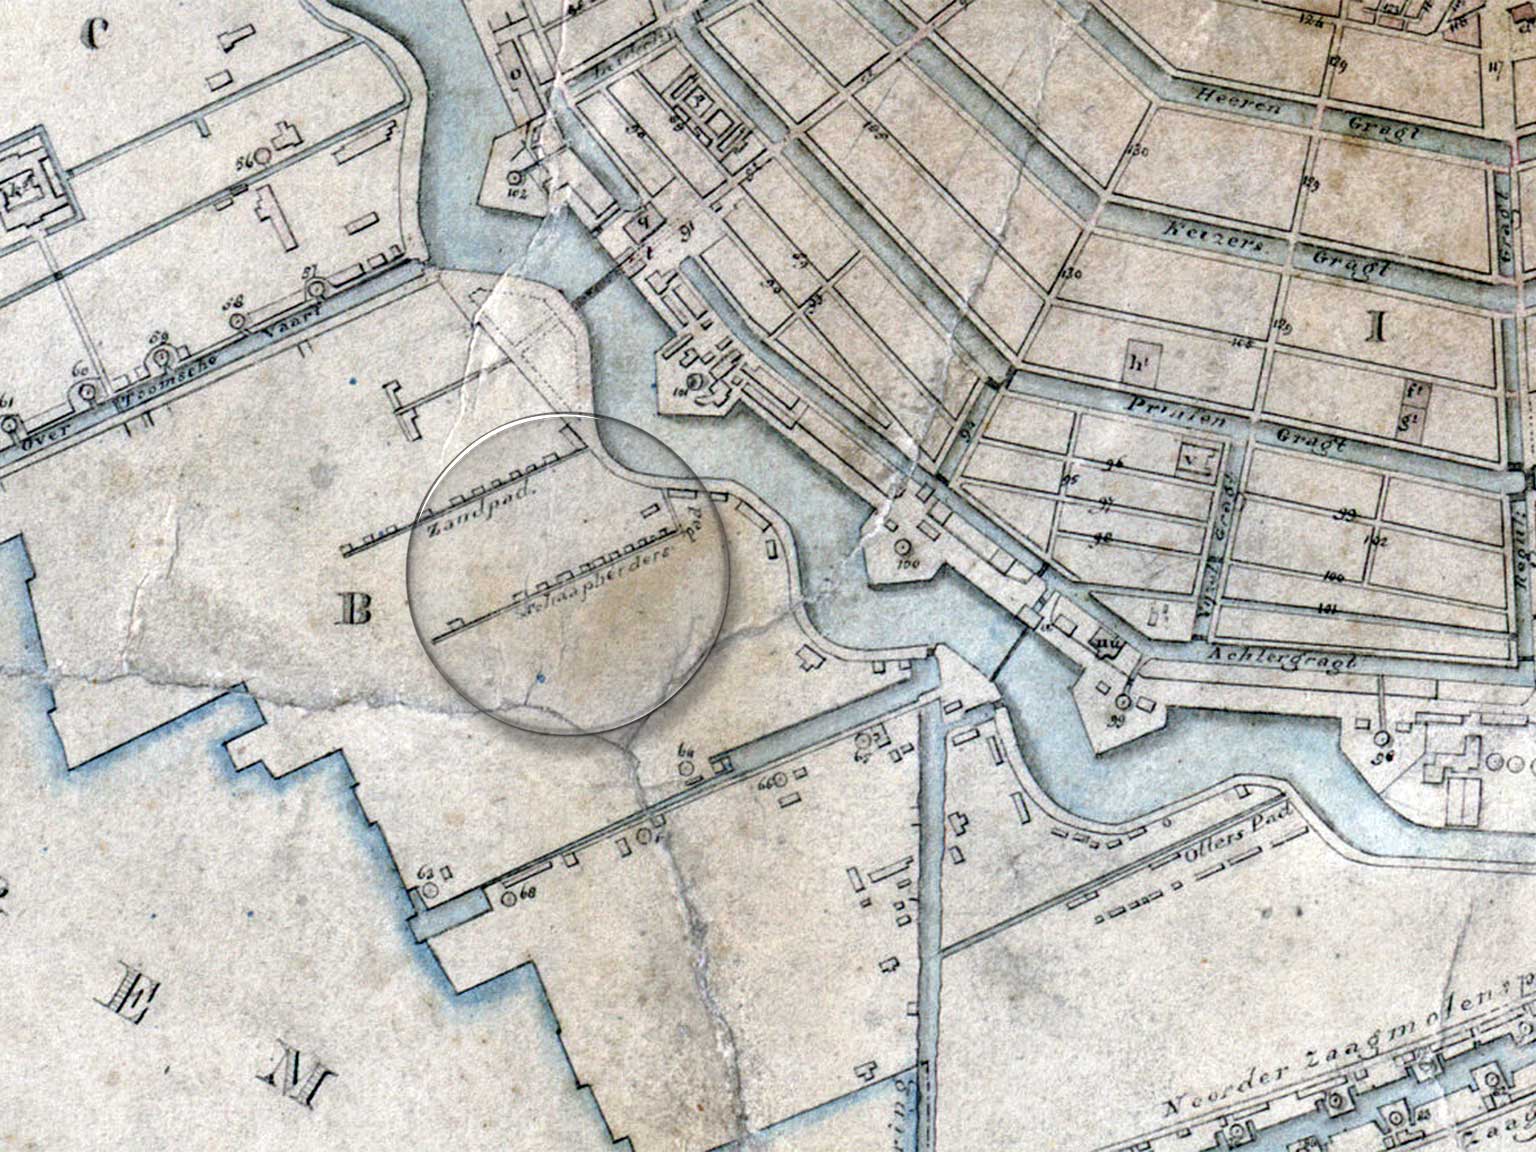 Schapenburgerpad, Amsterdam, on a map from 1811